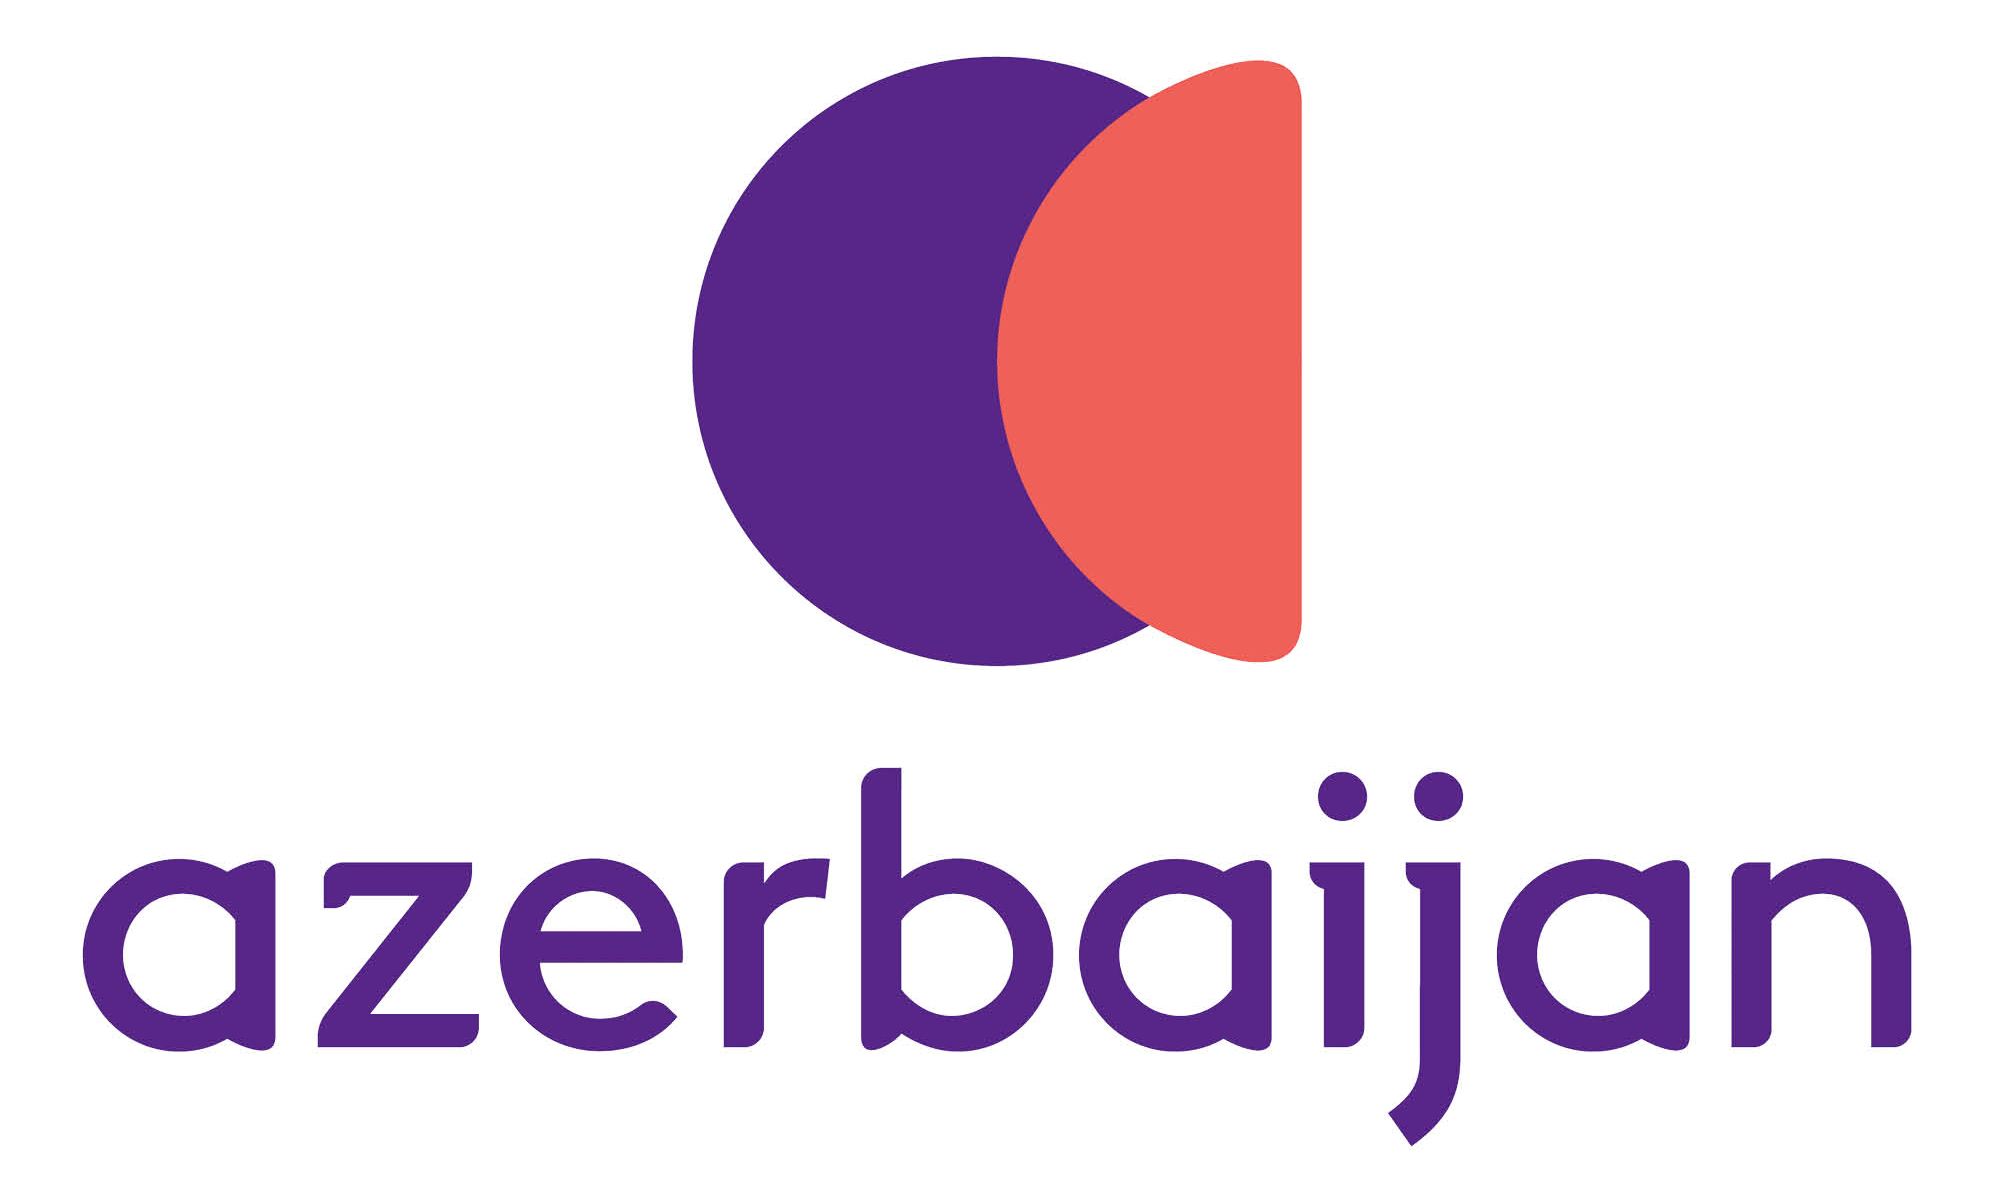 Red Violet Logo - Brand New: New Logo for Azerbaijan (Tourism) by Landor